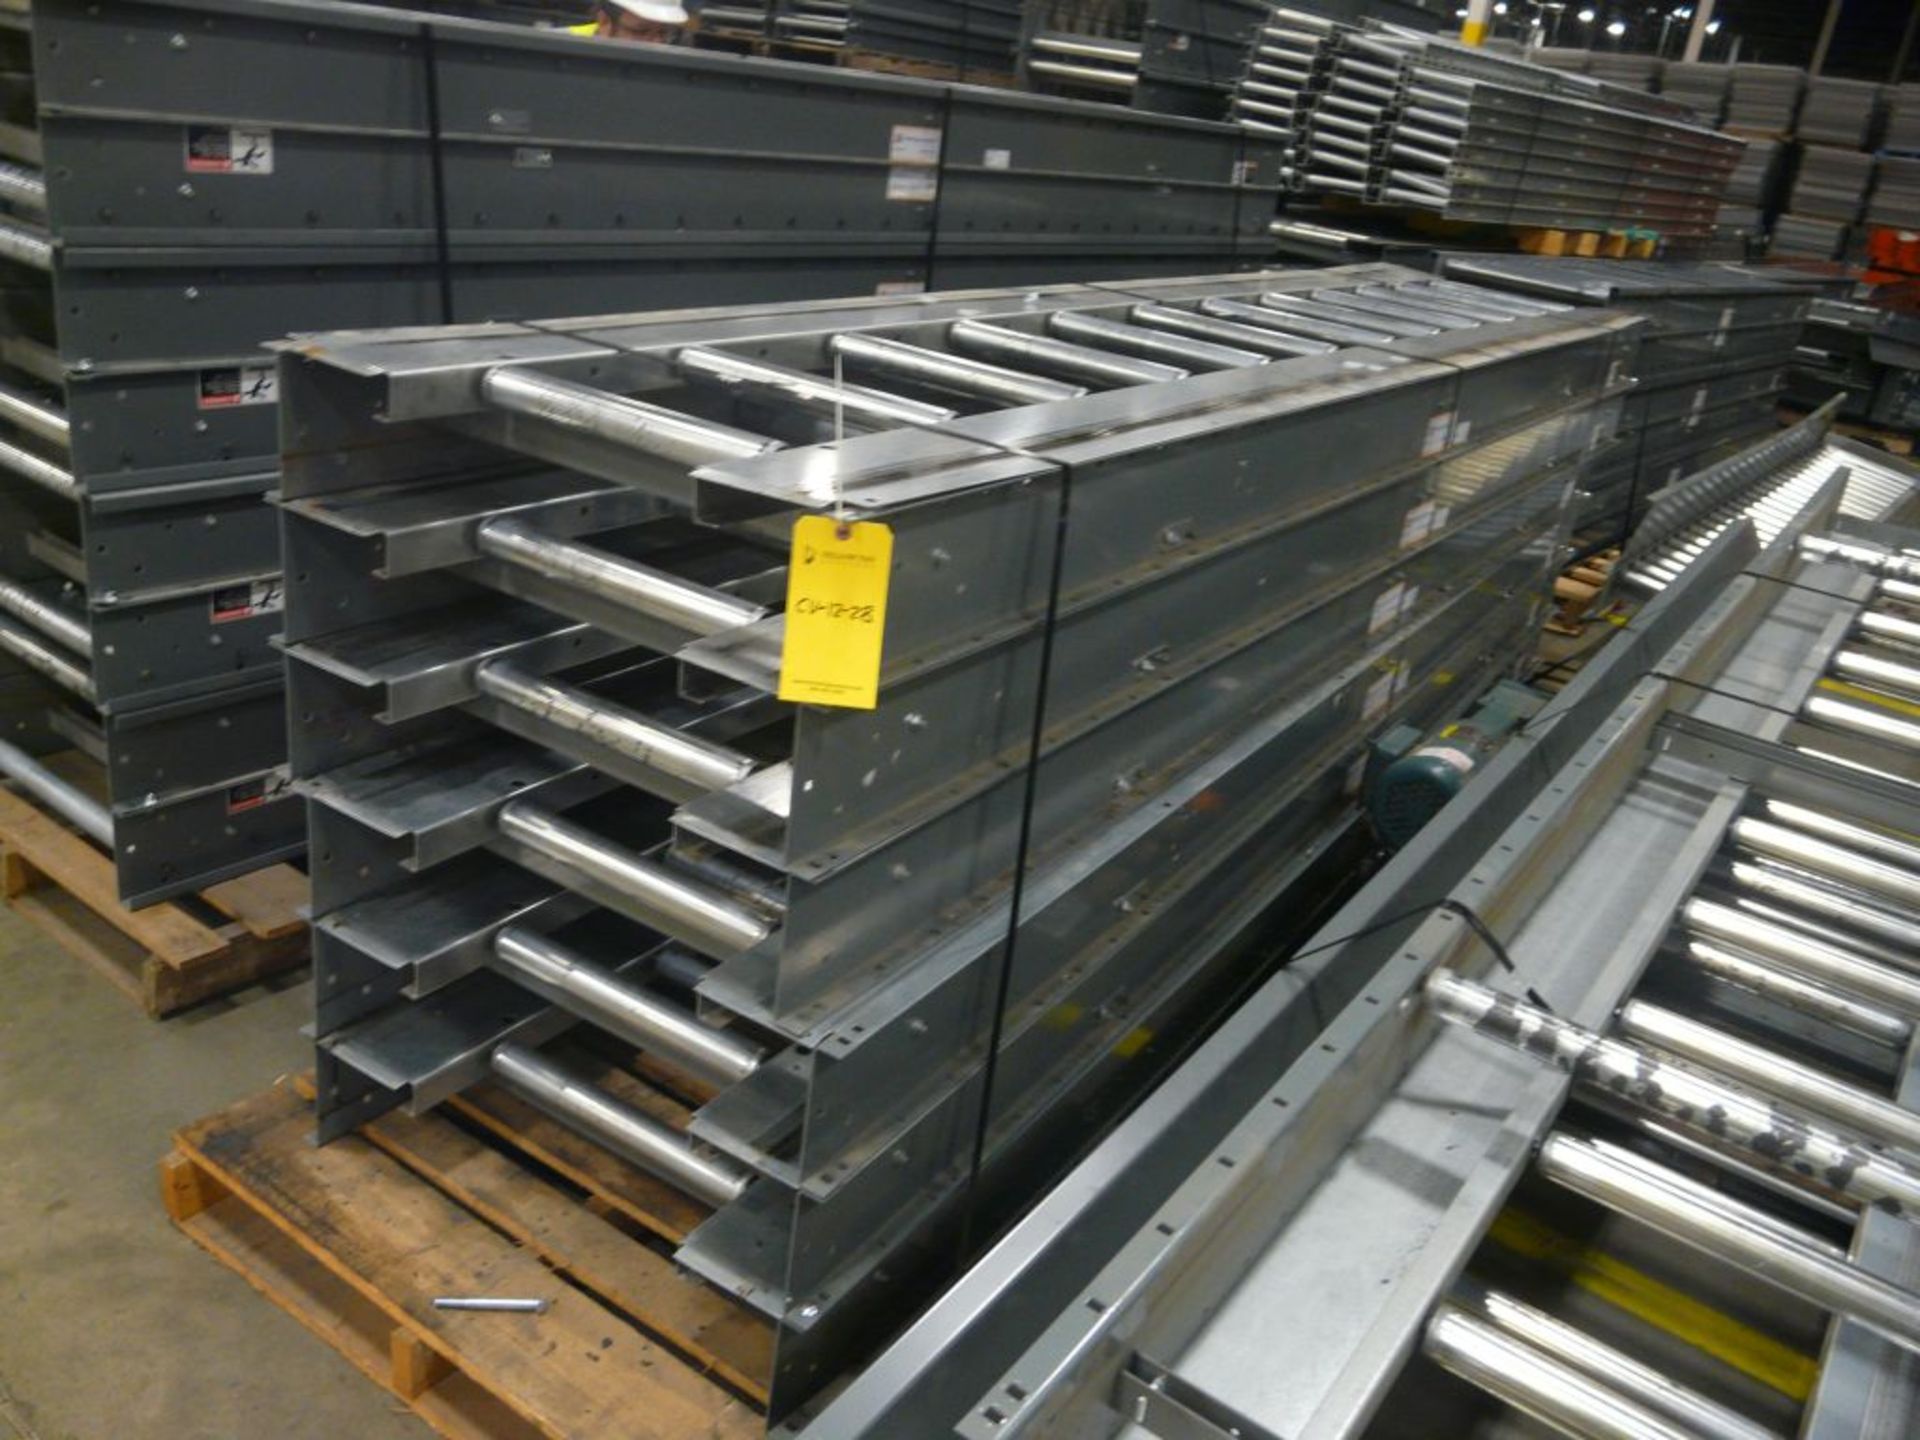 Lot of (6) 200 Belt Intermediate Conveyors - 12'L x 28"W; Tag: 223707 - $30 Lot Loading Fee